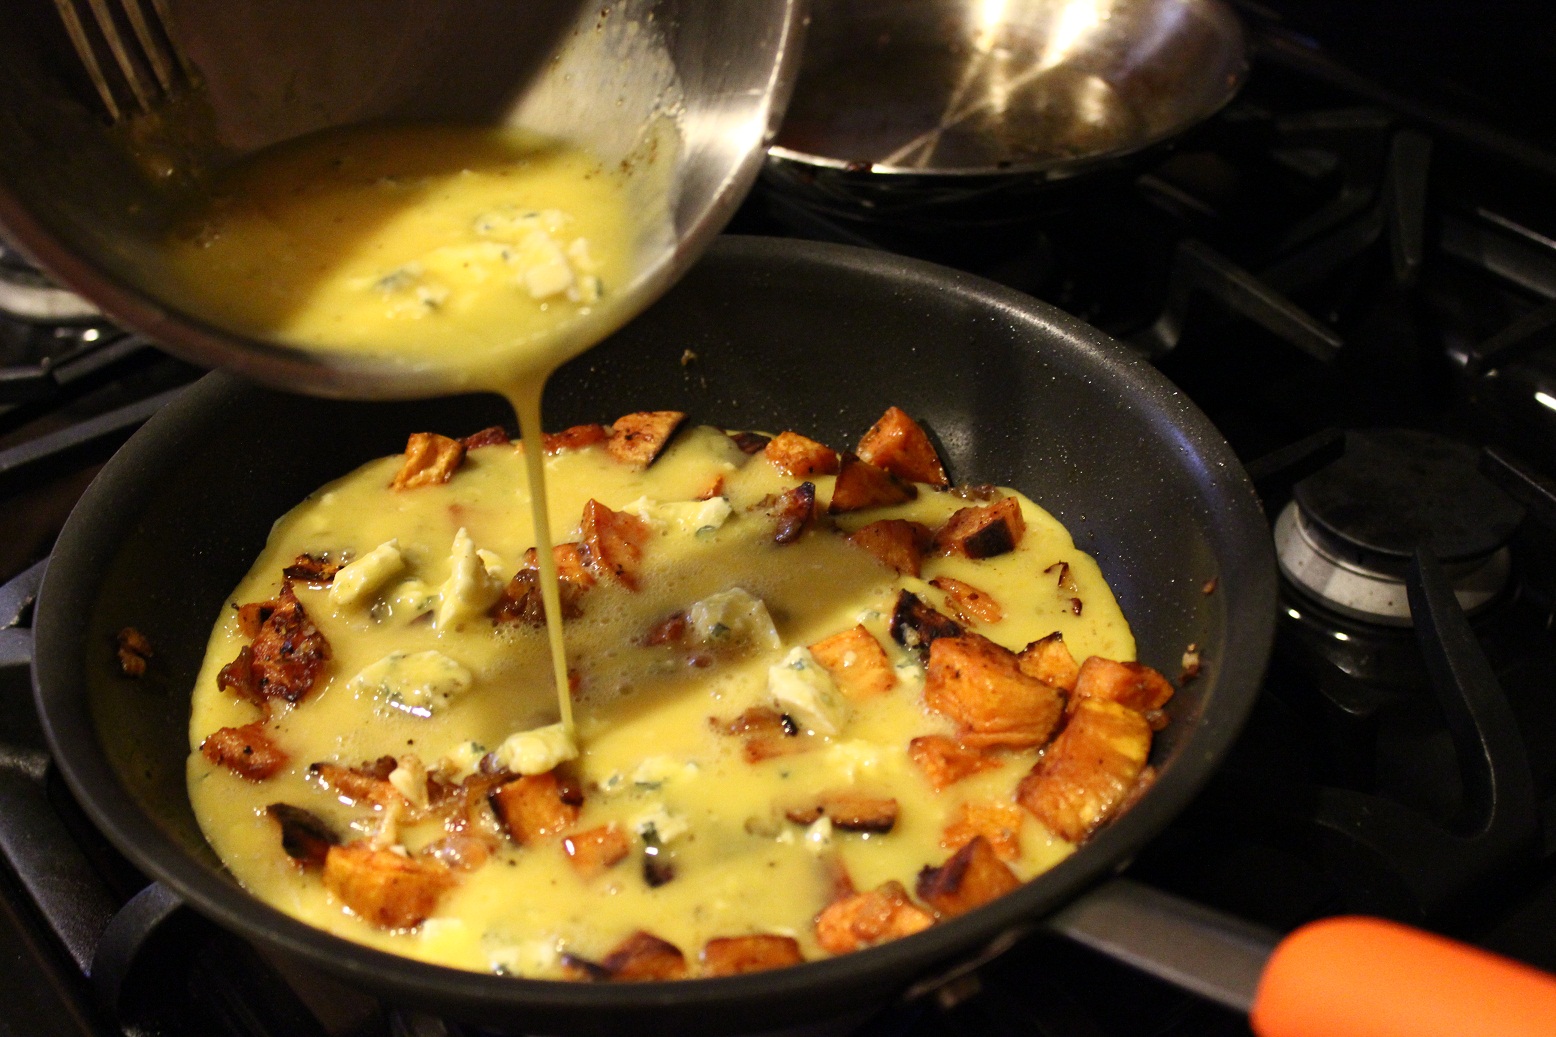 https://corkandspoon.files.wordpress.com/2013/01/tortilla-espanola-sweet-potato-adding-egg.jpg